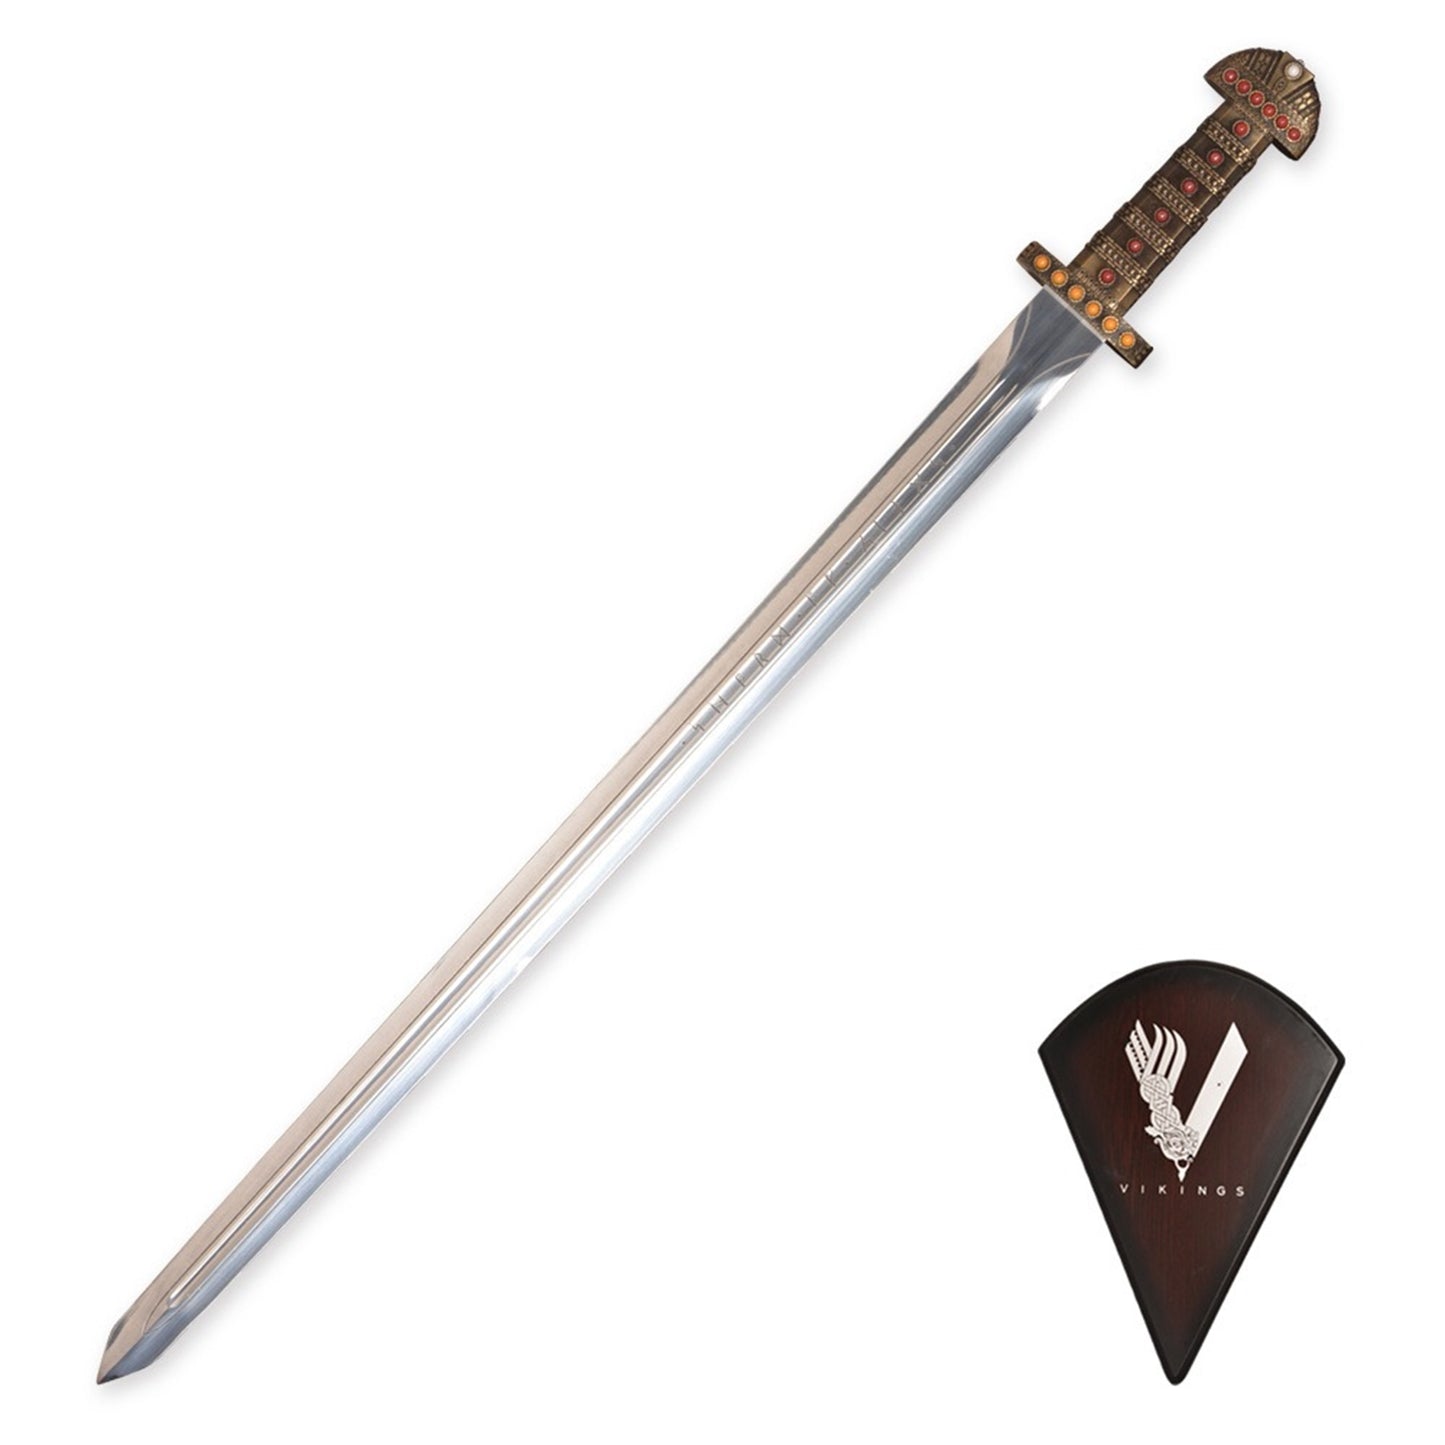 Viking Sword of Ragnar Lothbrok Life-size Metal Replica